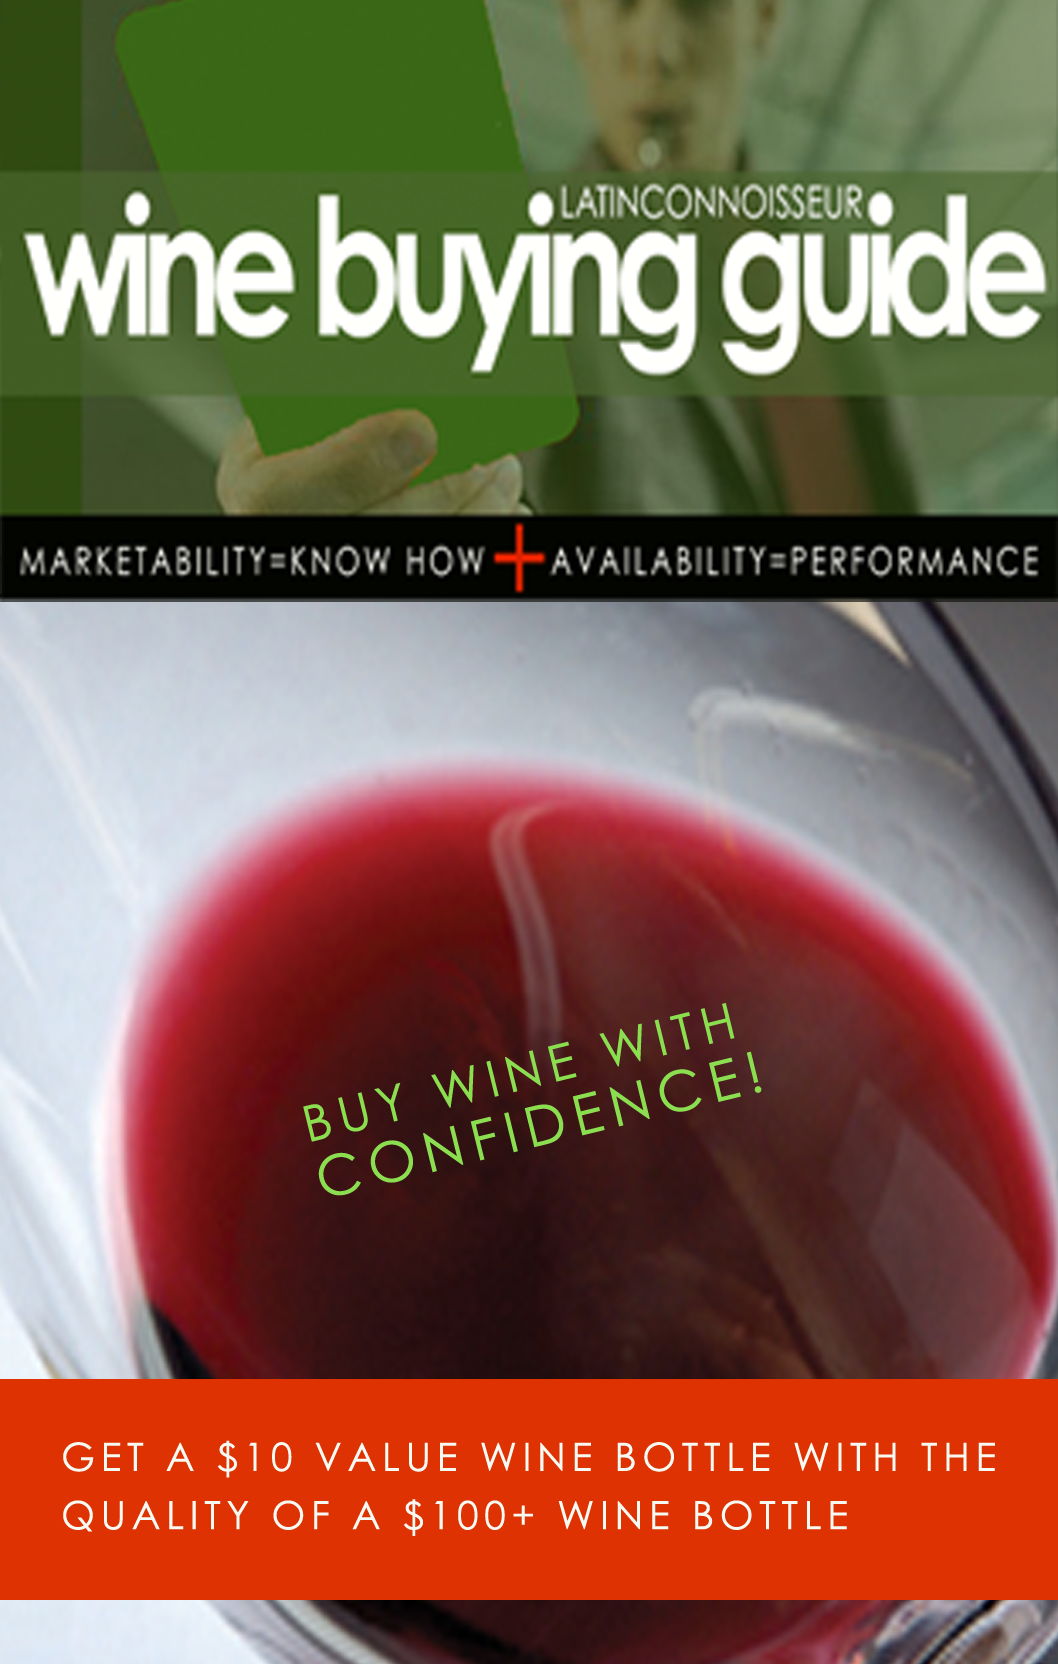 LATIN HISPANIC WINE BUYING GUIDE+BEST WINE VALUE WINES